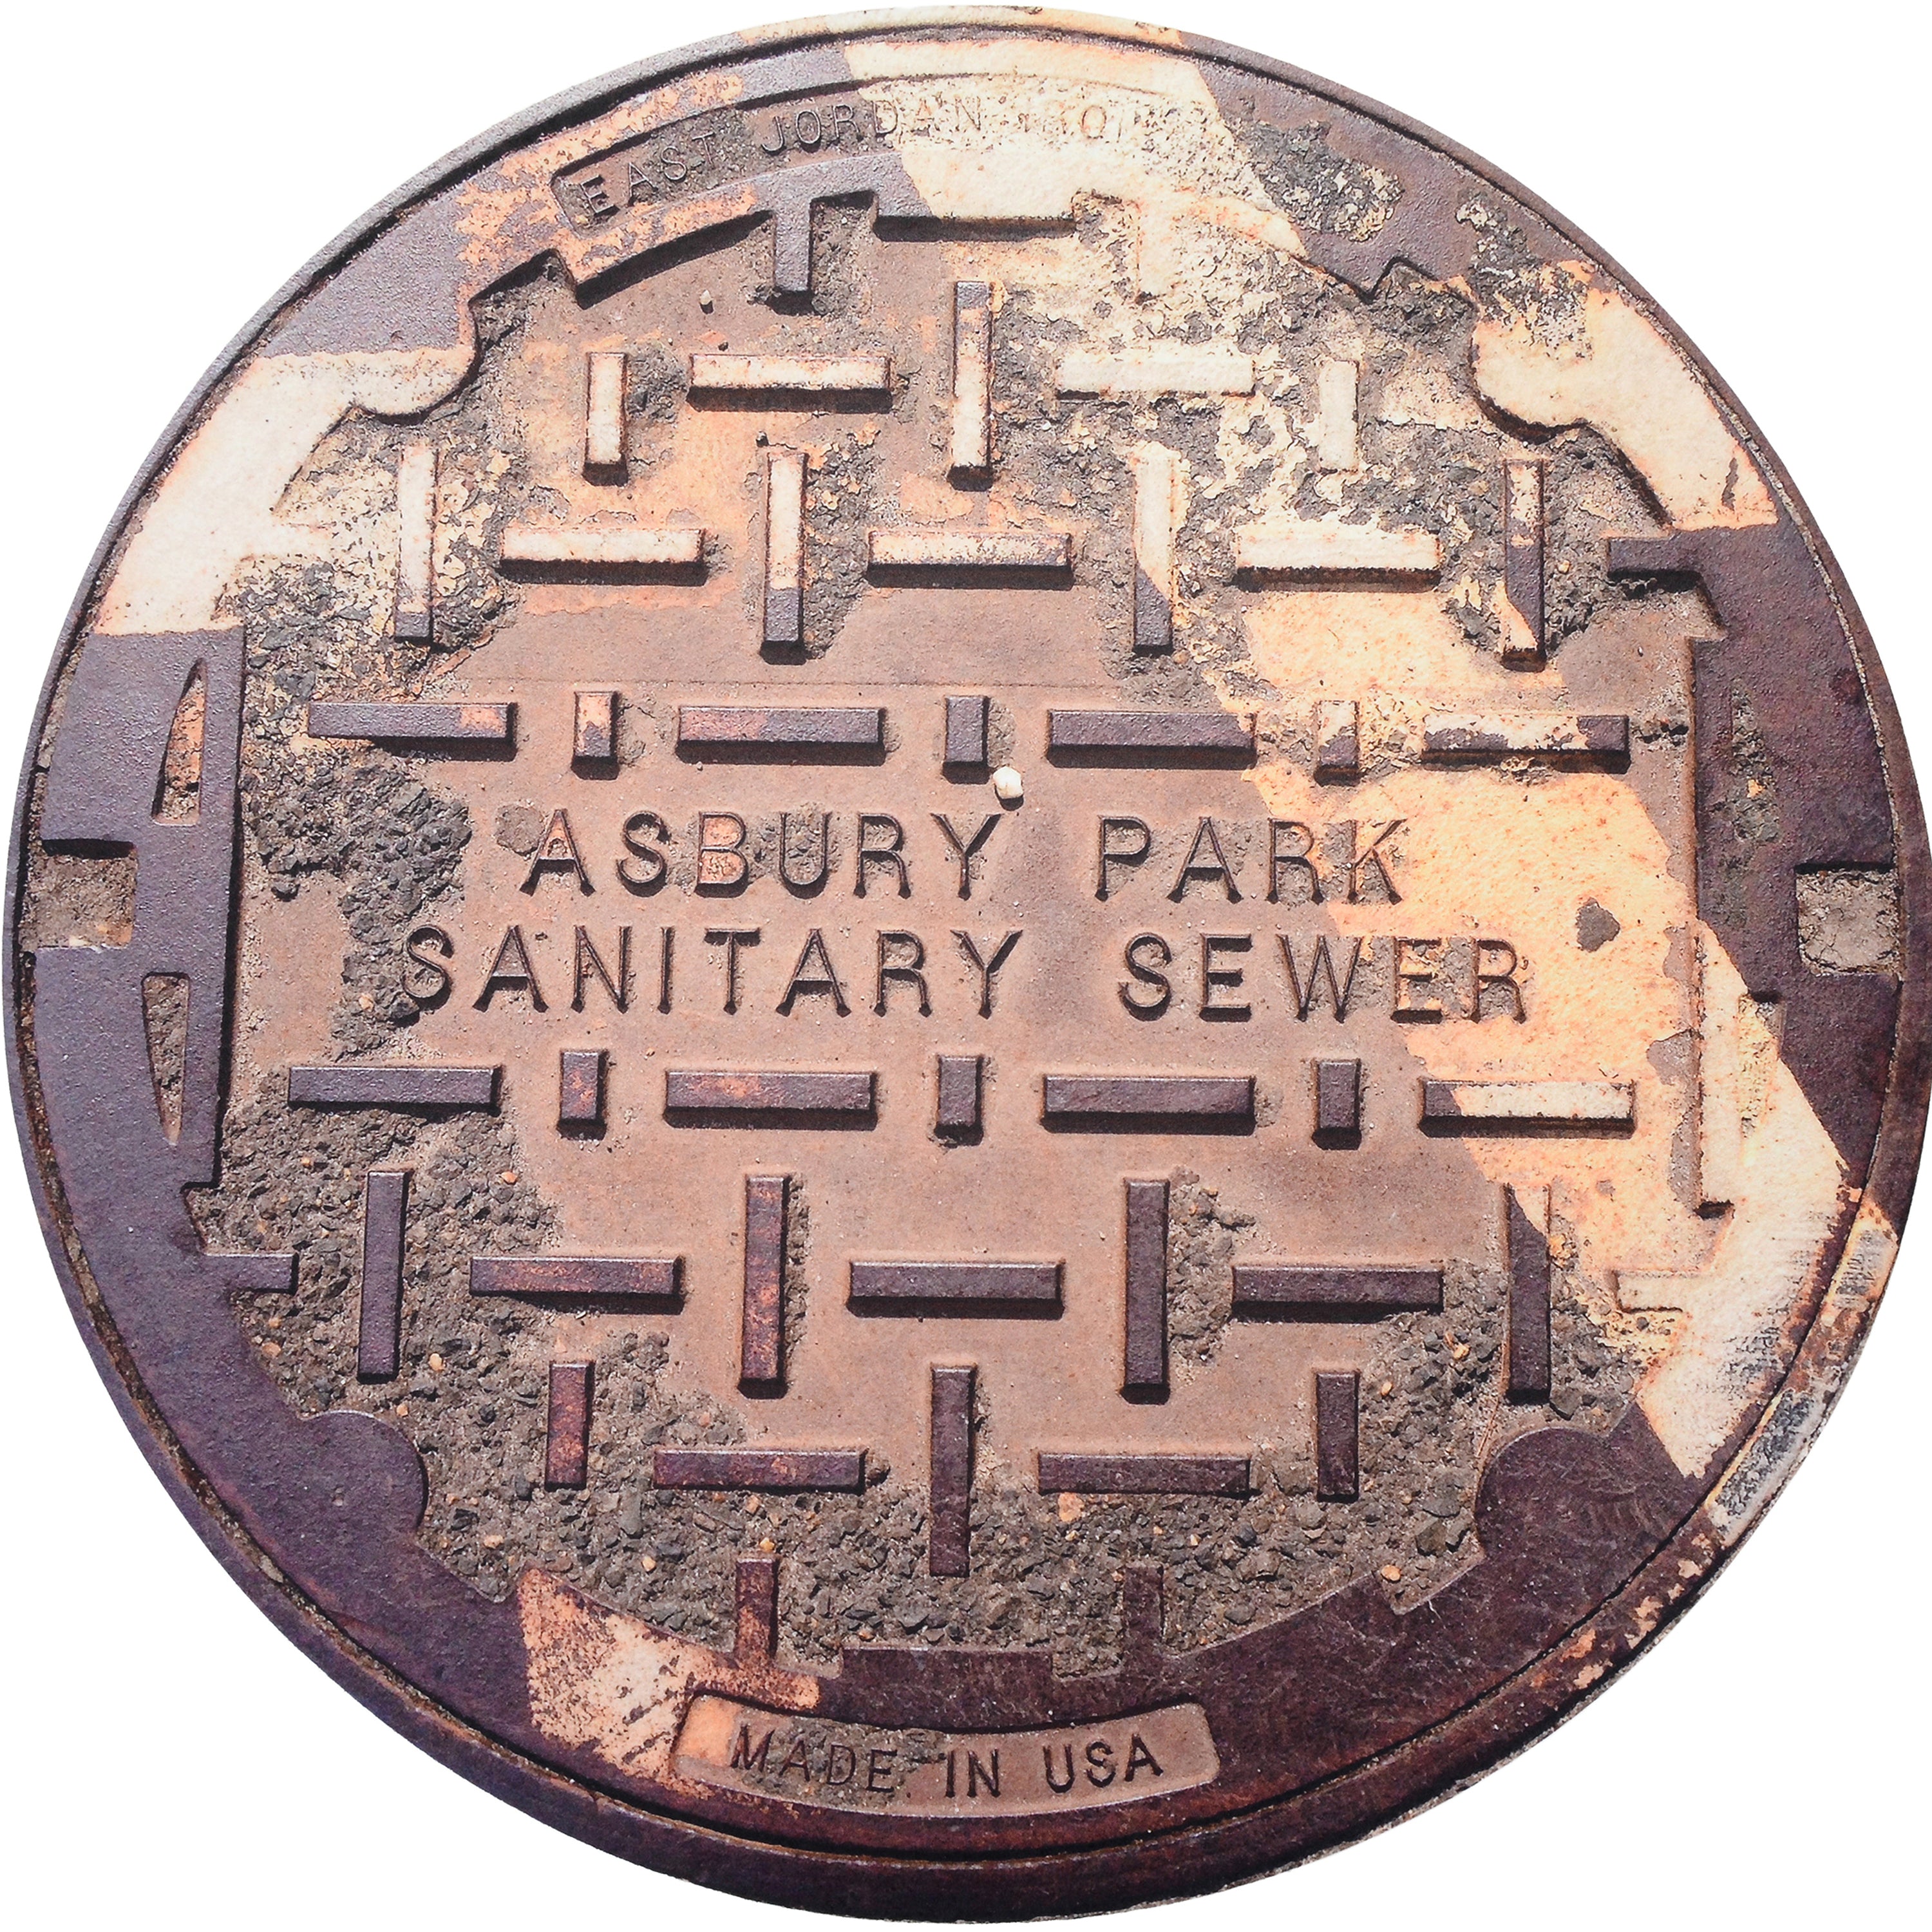 EAST SERIES - Sewer Cover Doormat, Trivet, Coaster - Asbury Park, NJ